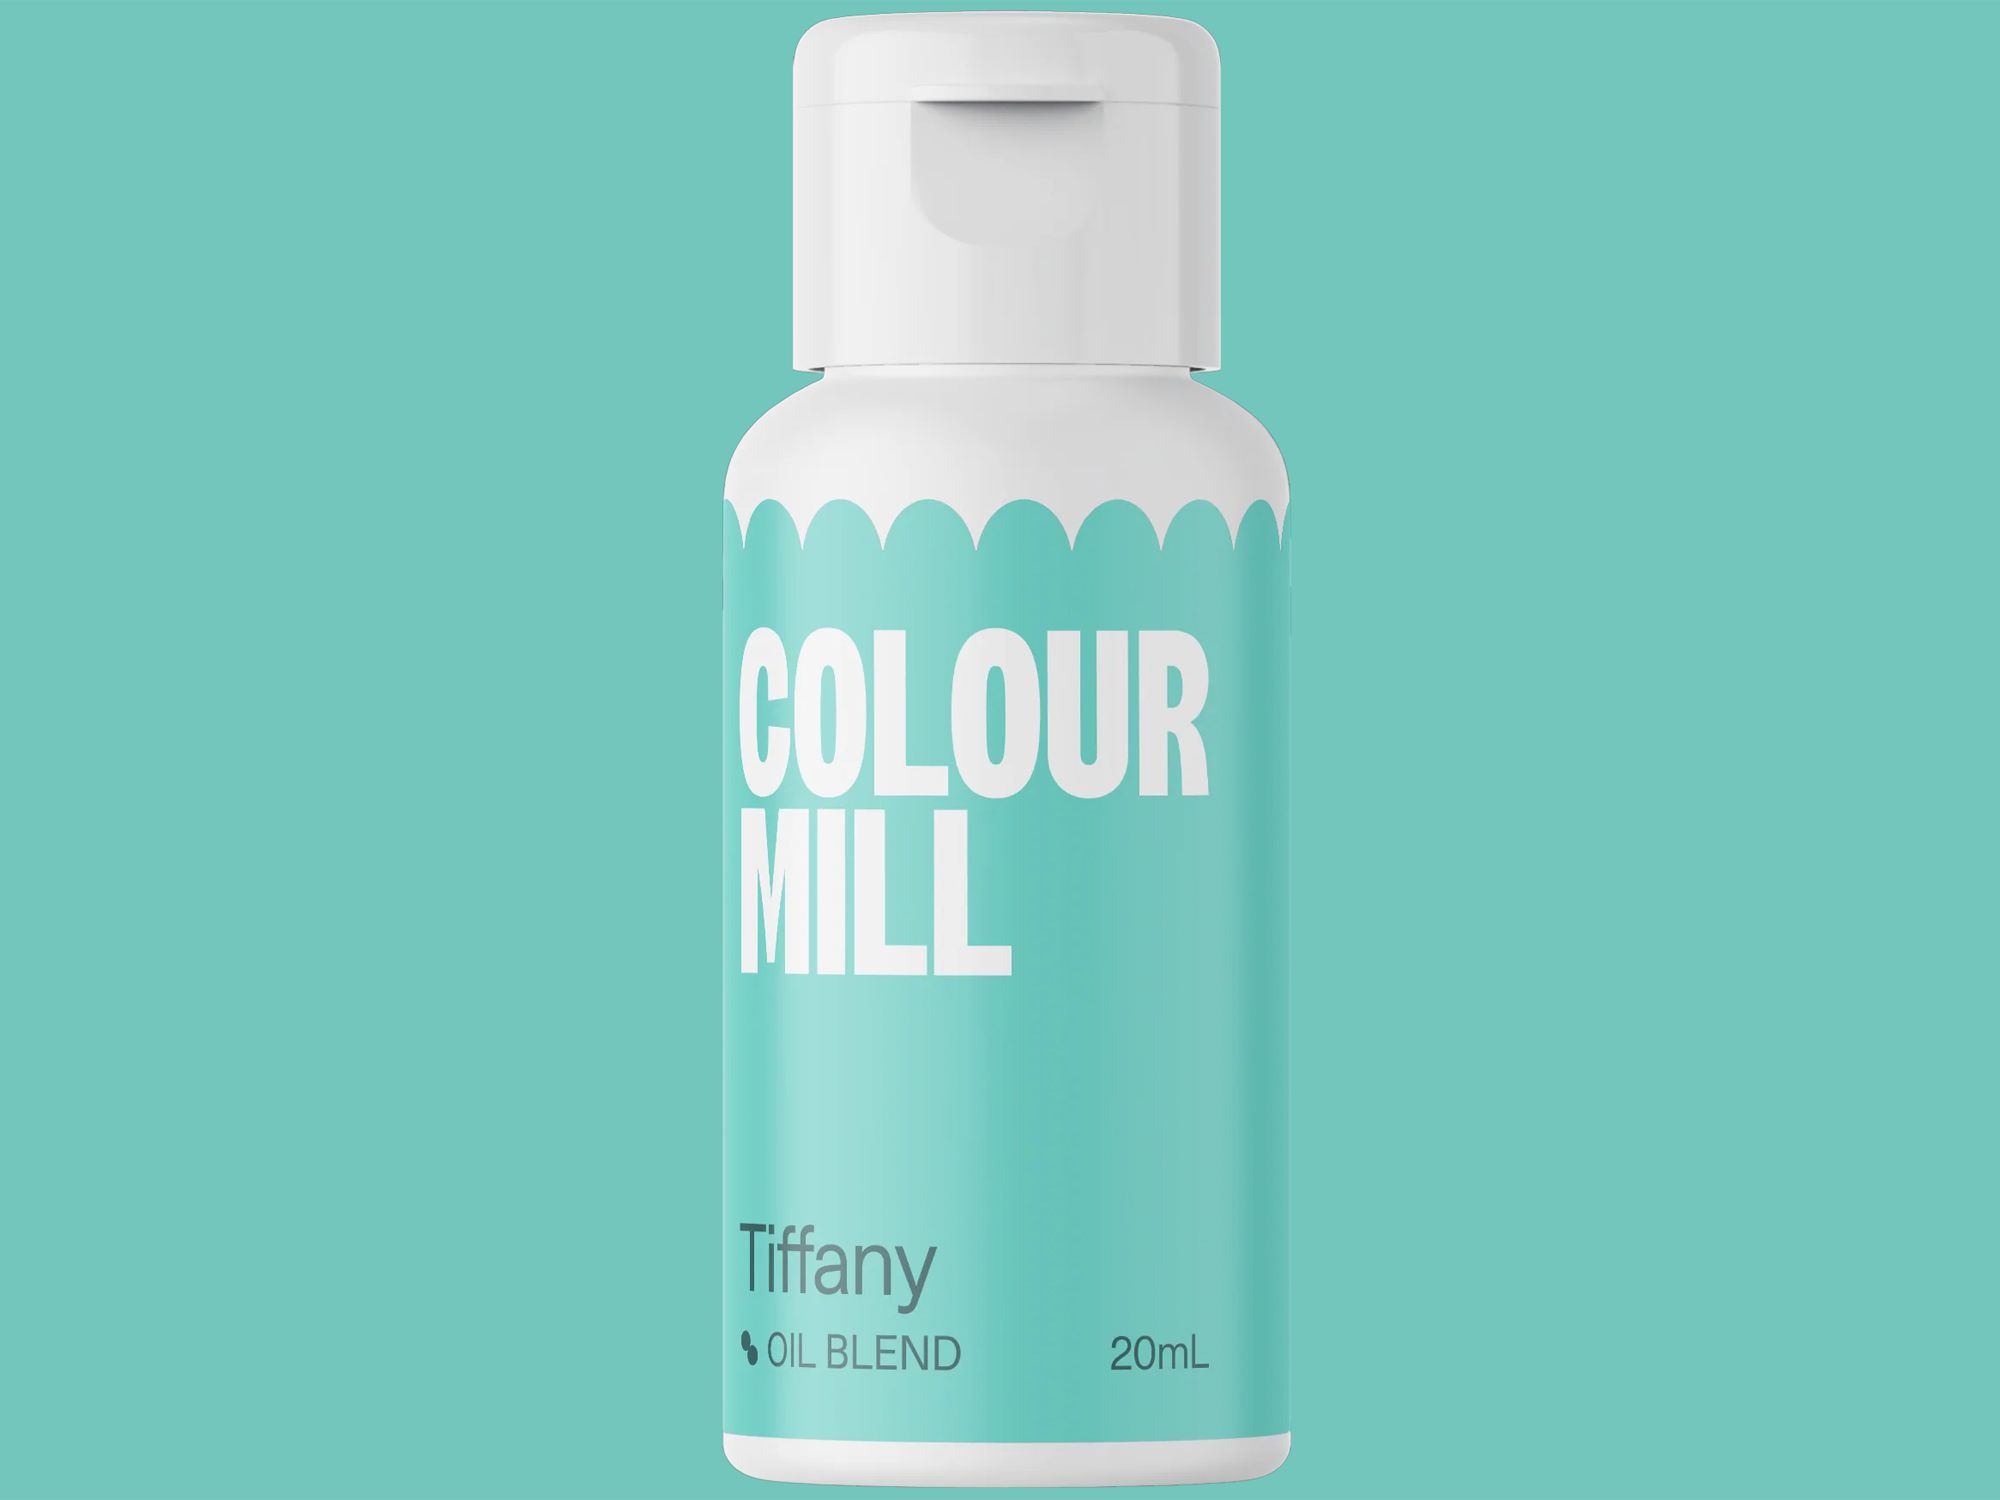 Colour Mill Tiffany (Oil Blend) 20ml